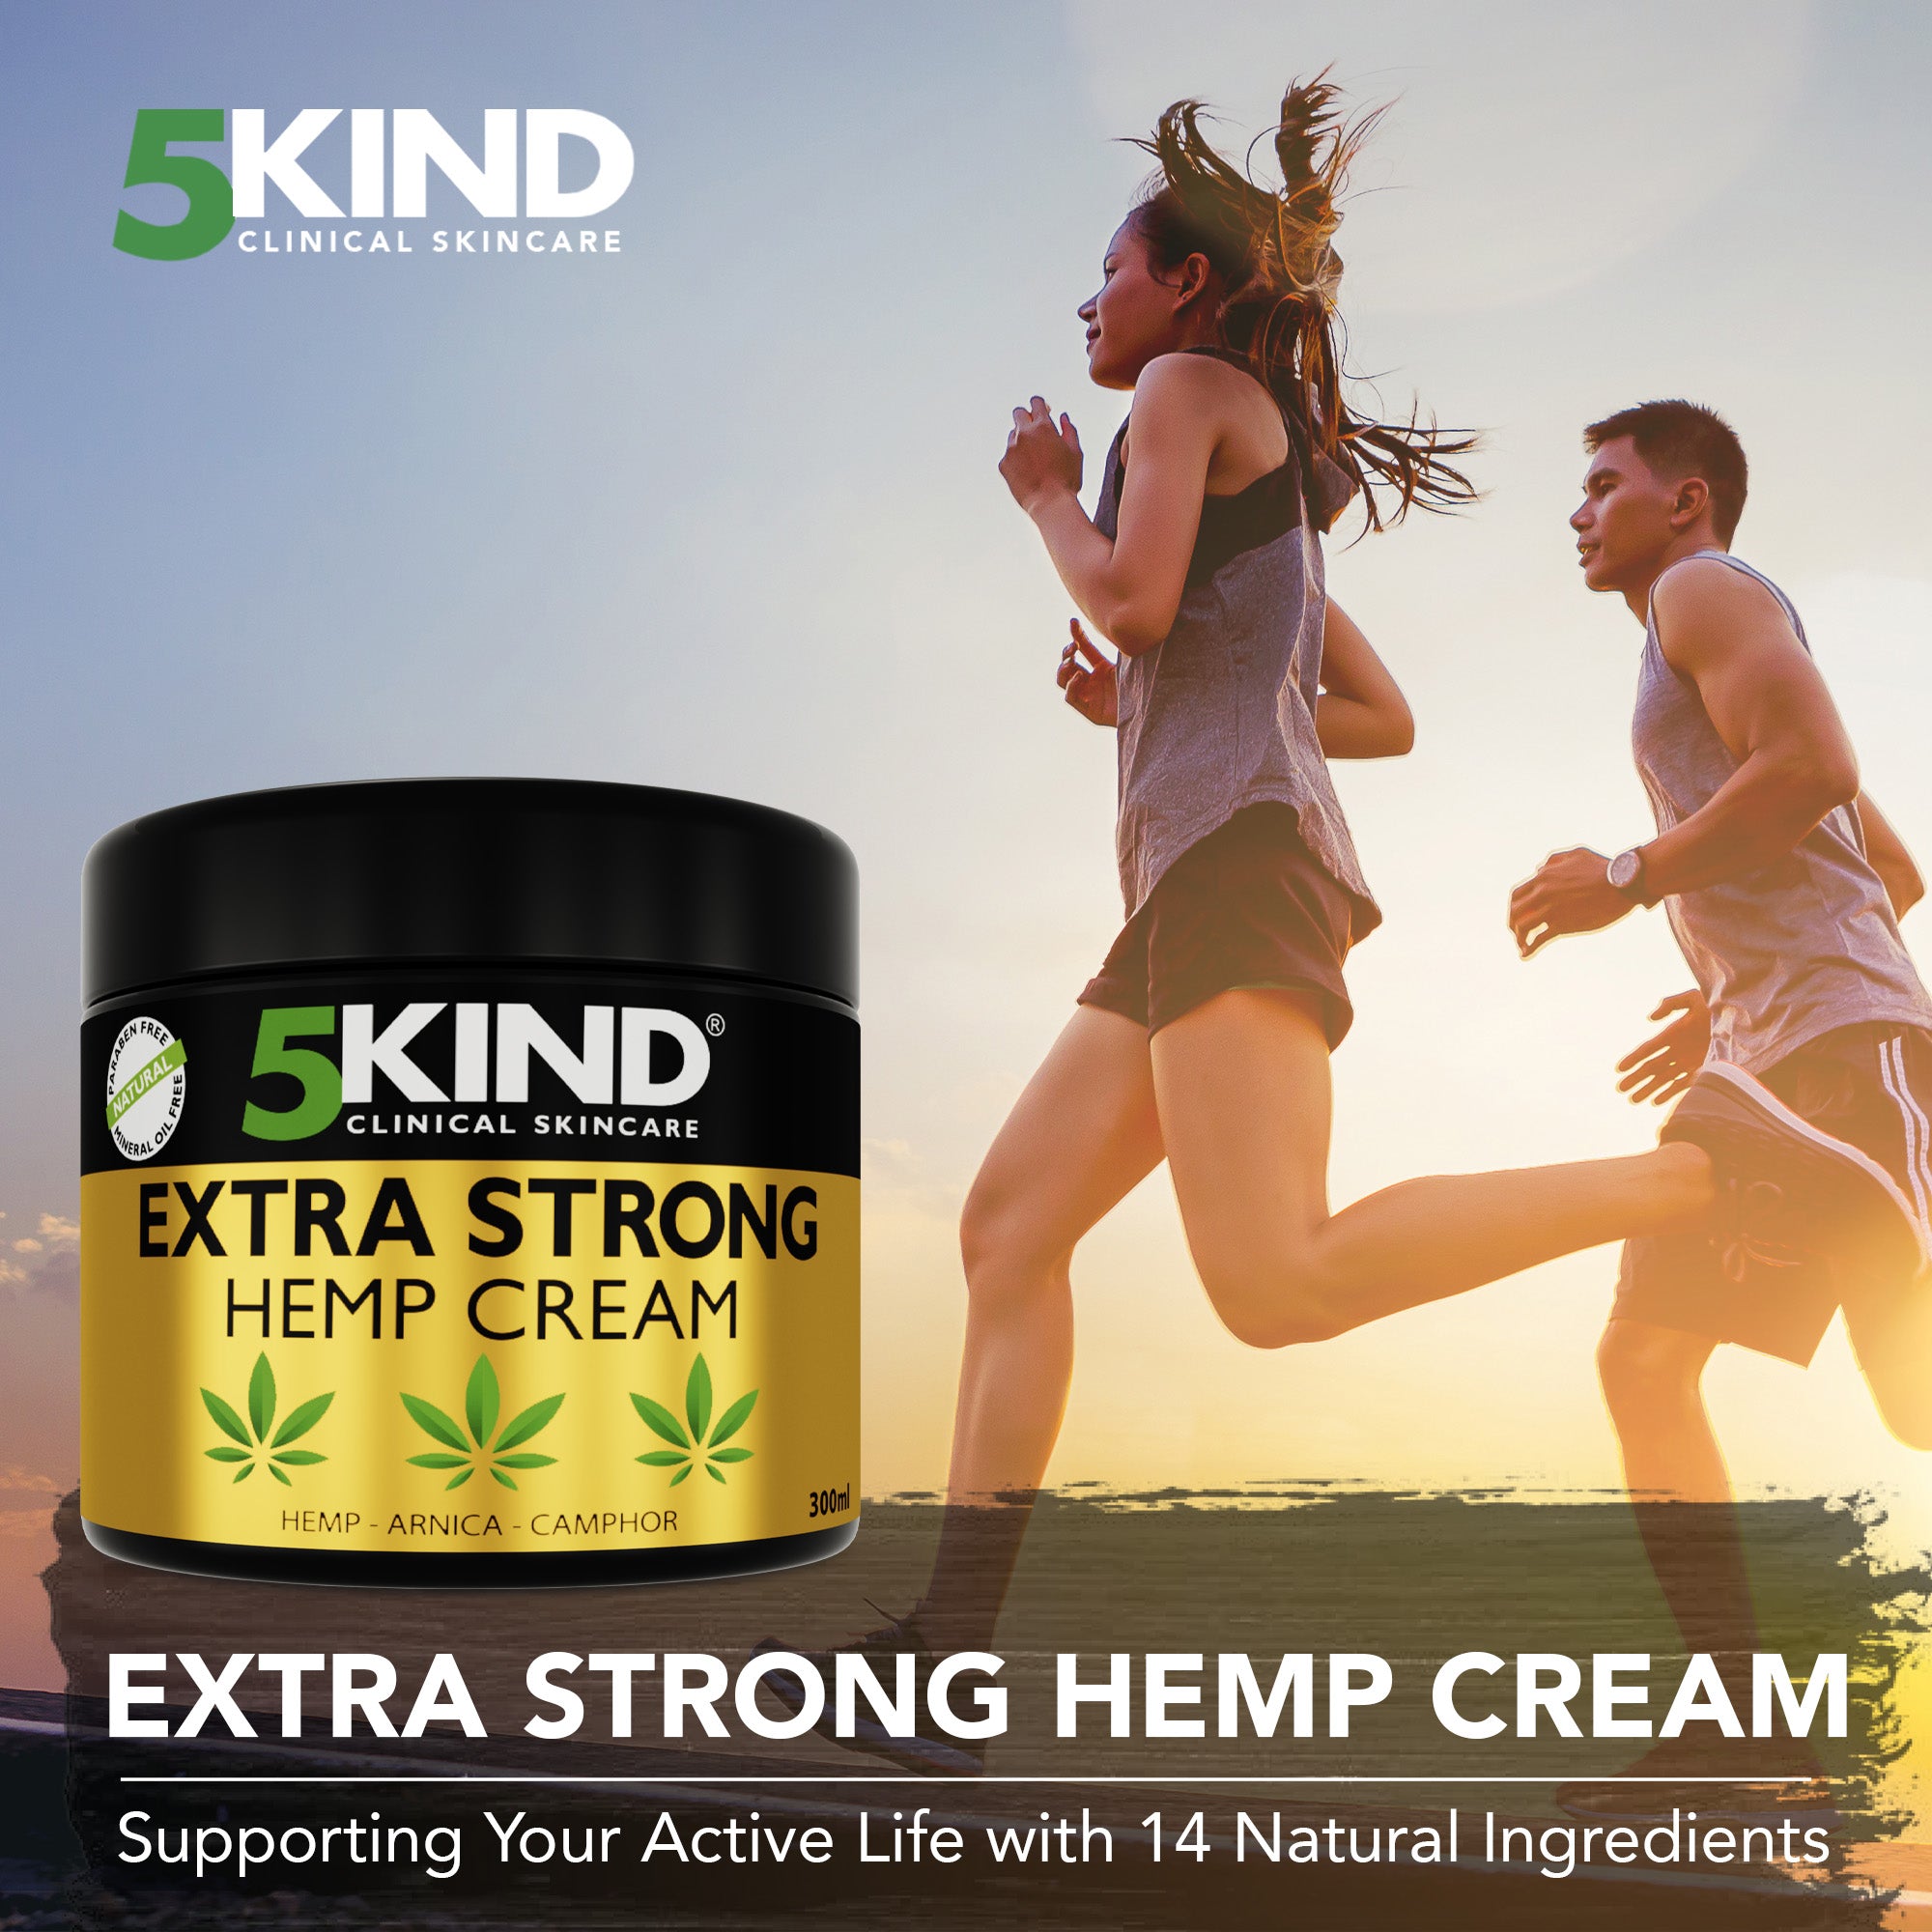 5Kind Extra Strong Hemp Cream 300ml